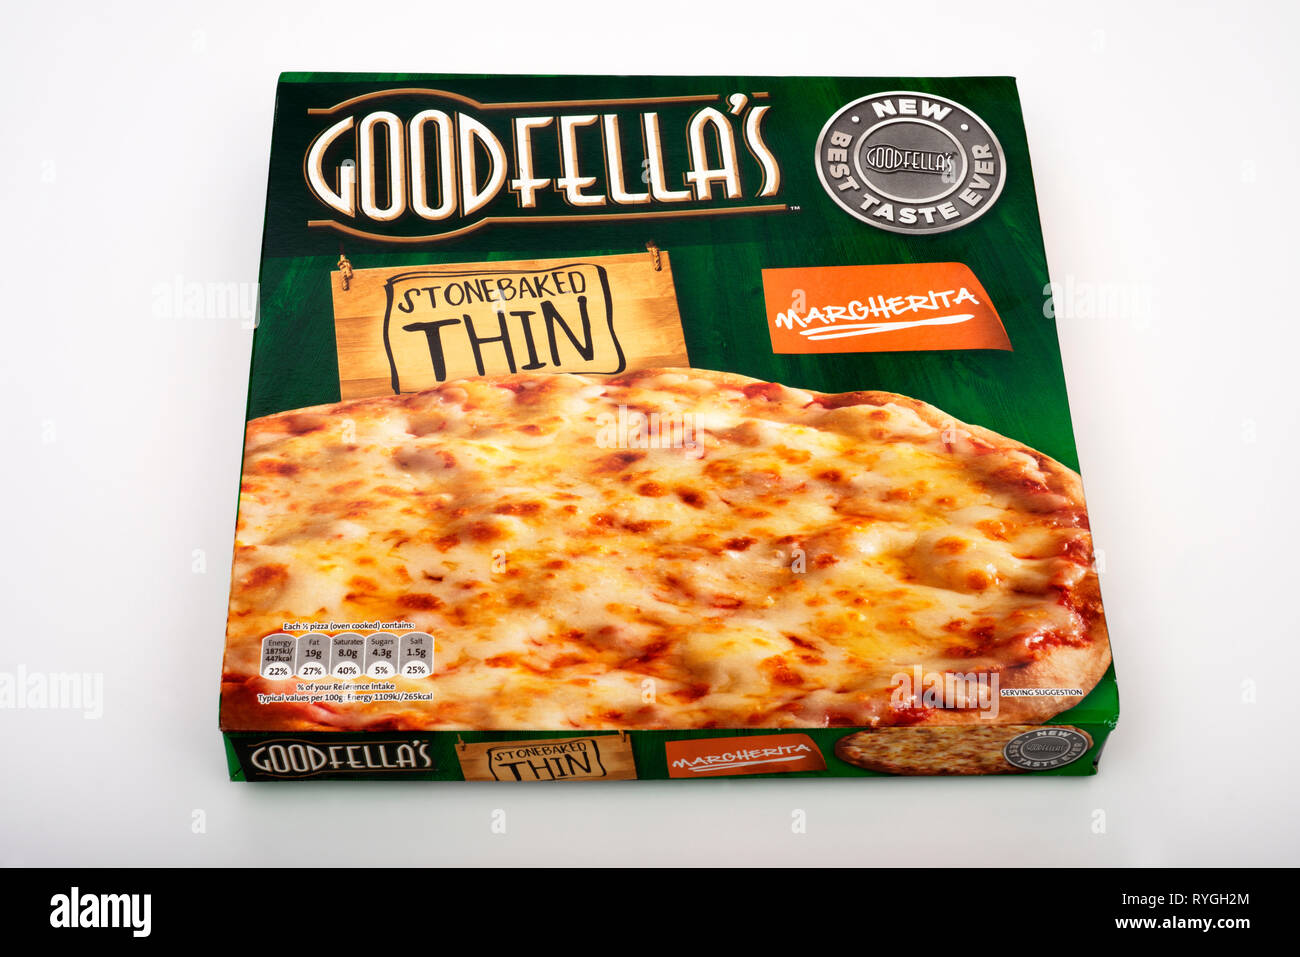 Goodfellas stonebaked thin Margherita pizza Stockfoto